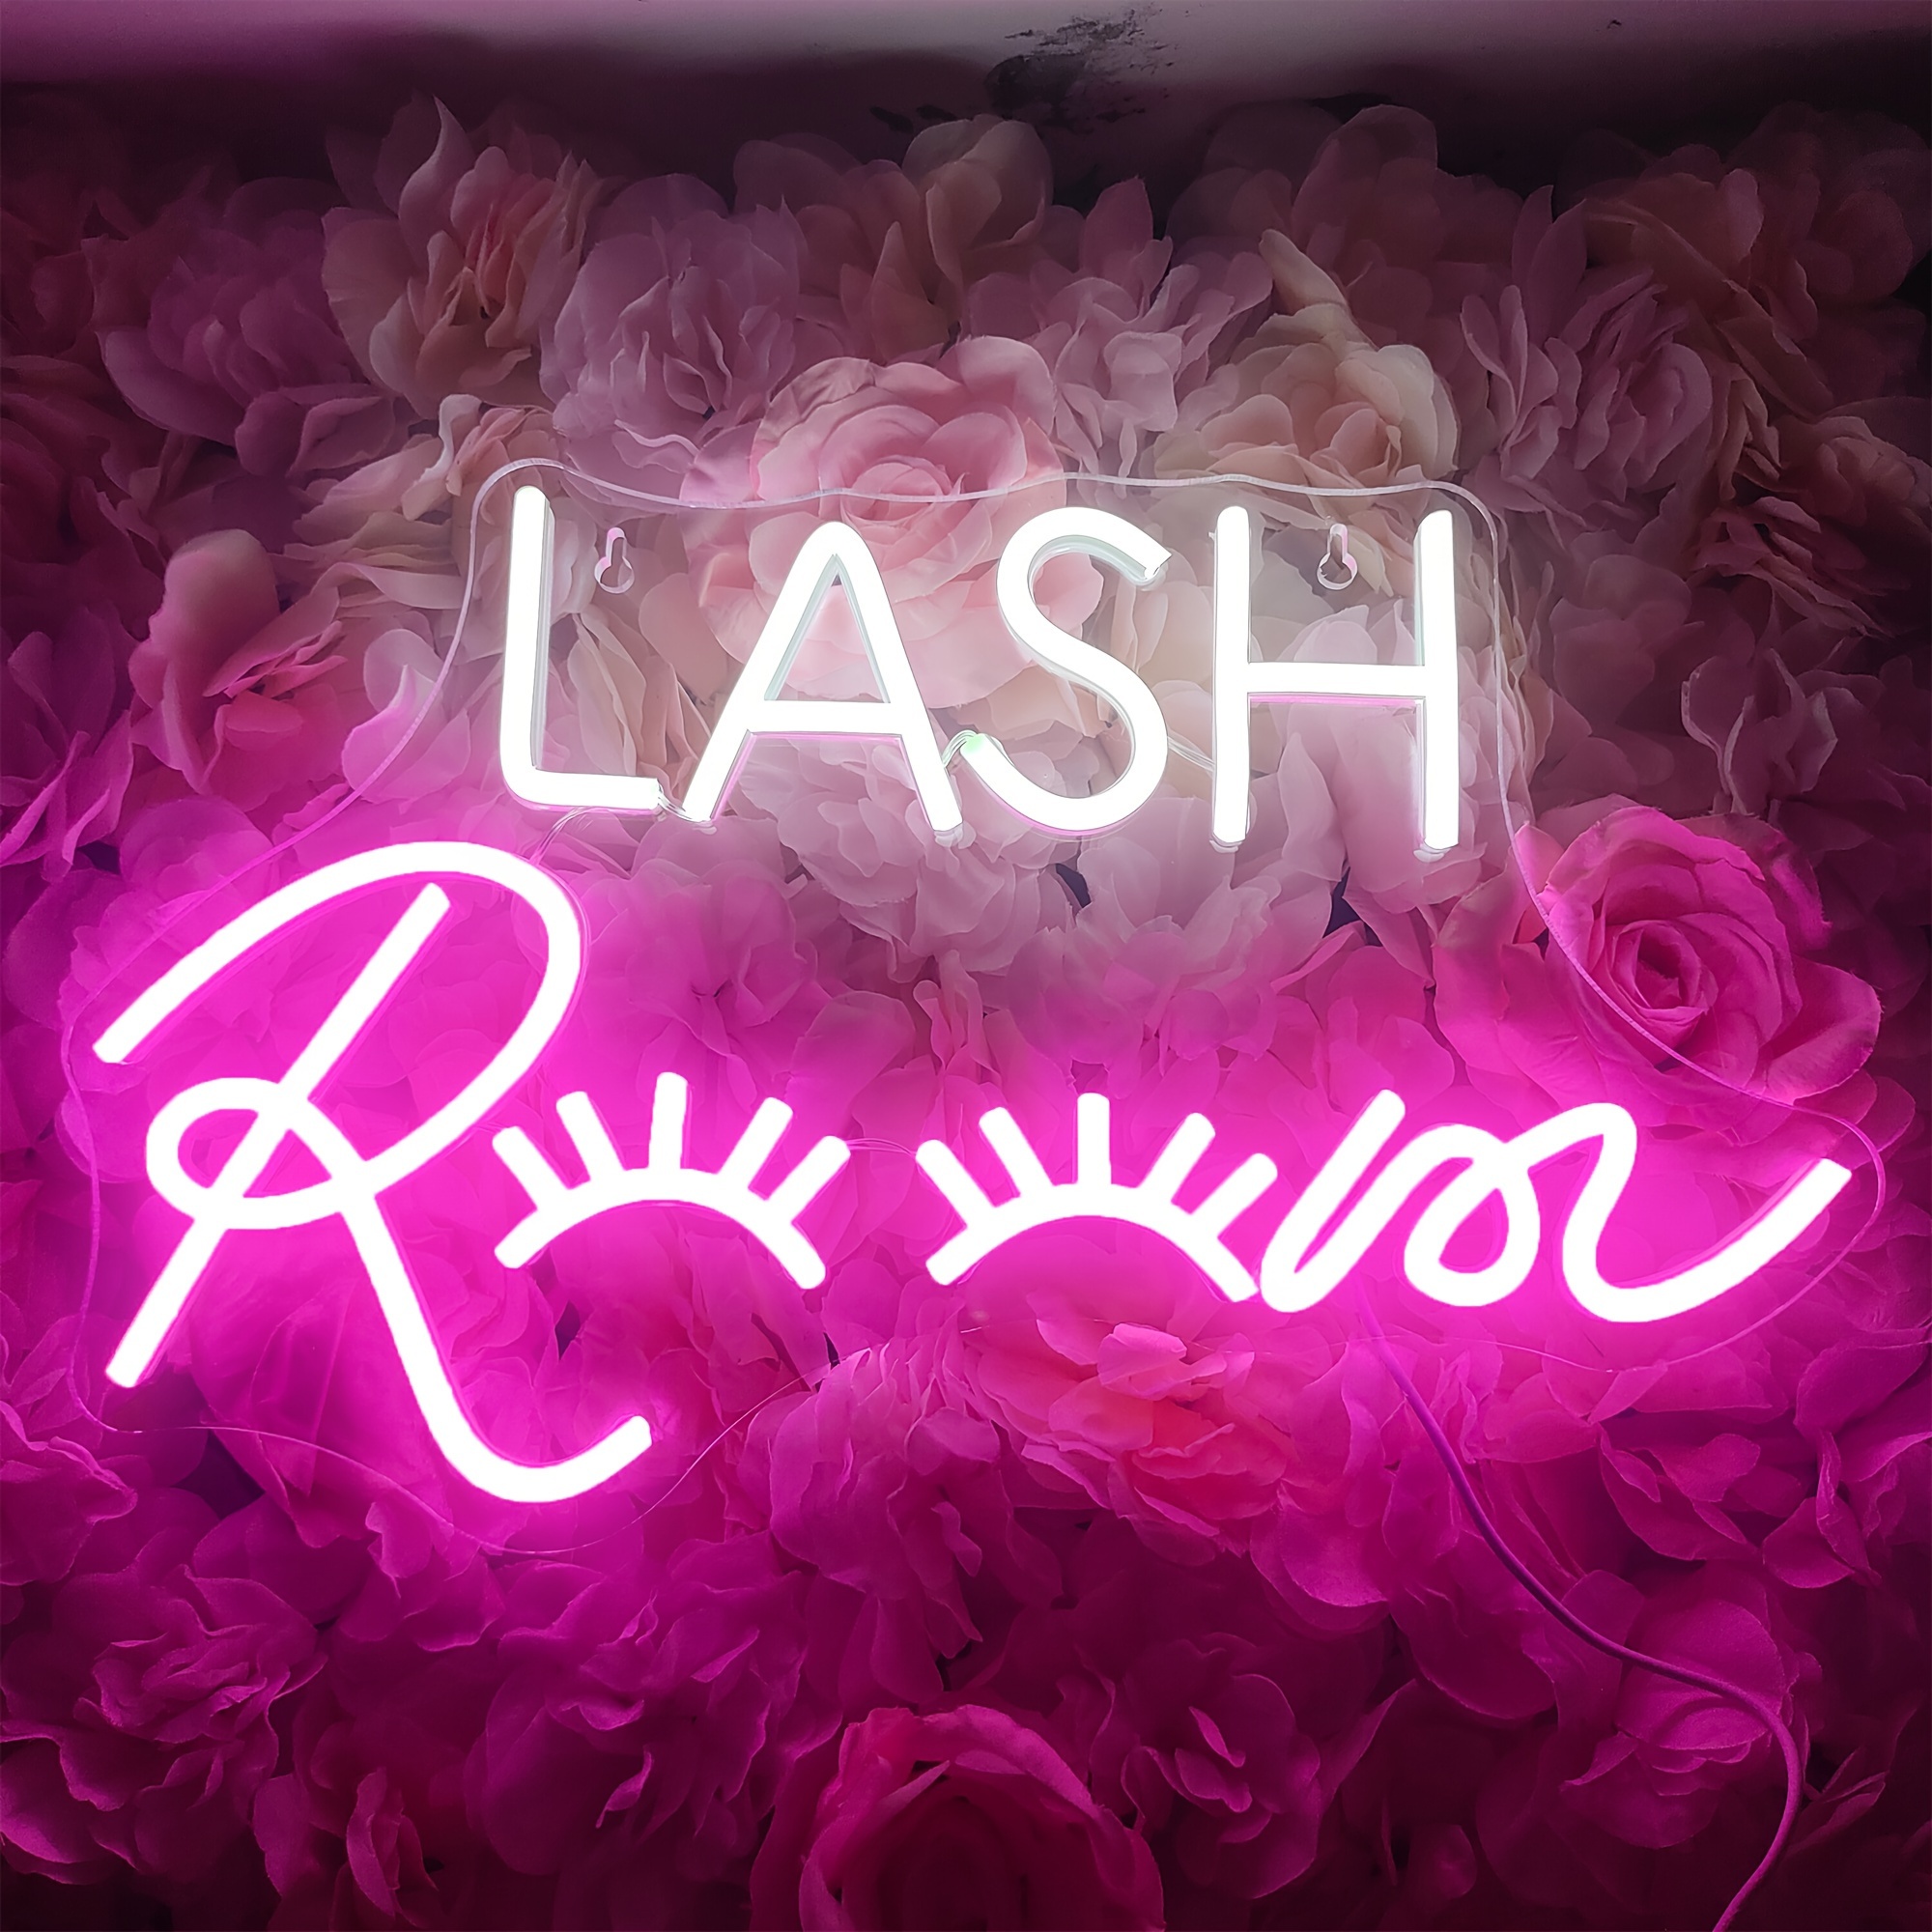 Yay it's lash day Neon Sign Led Lights Lash Room Decor Wall Art